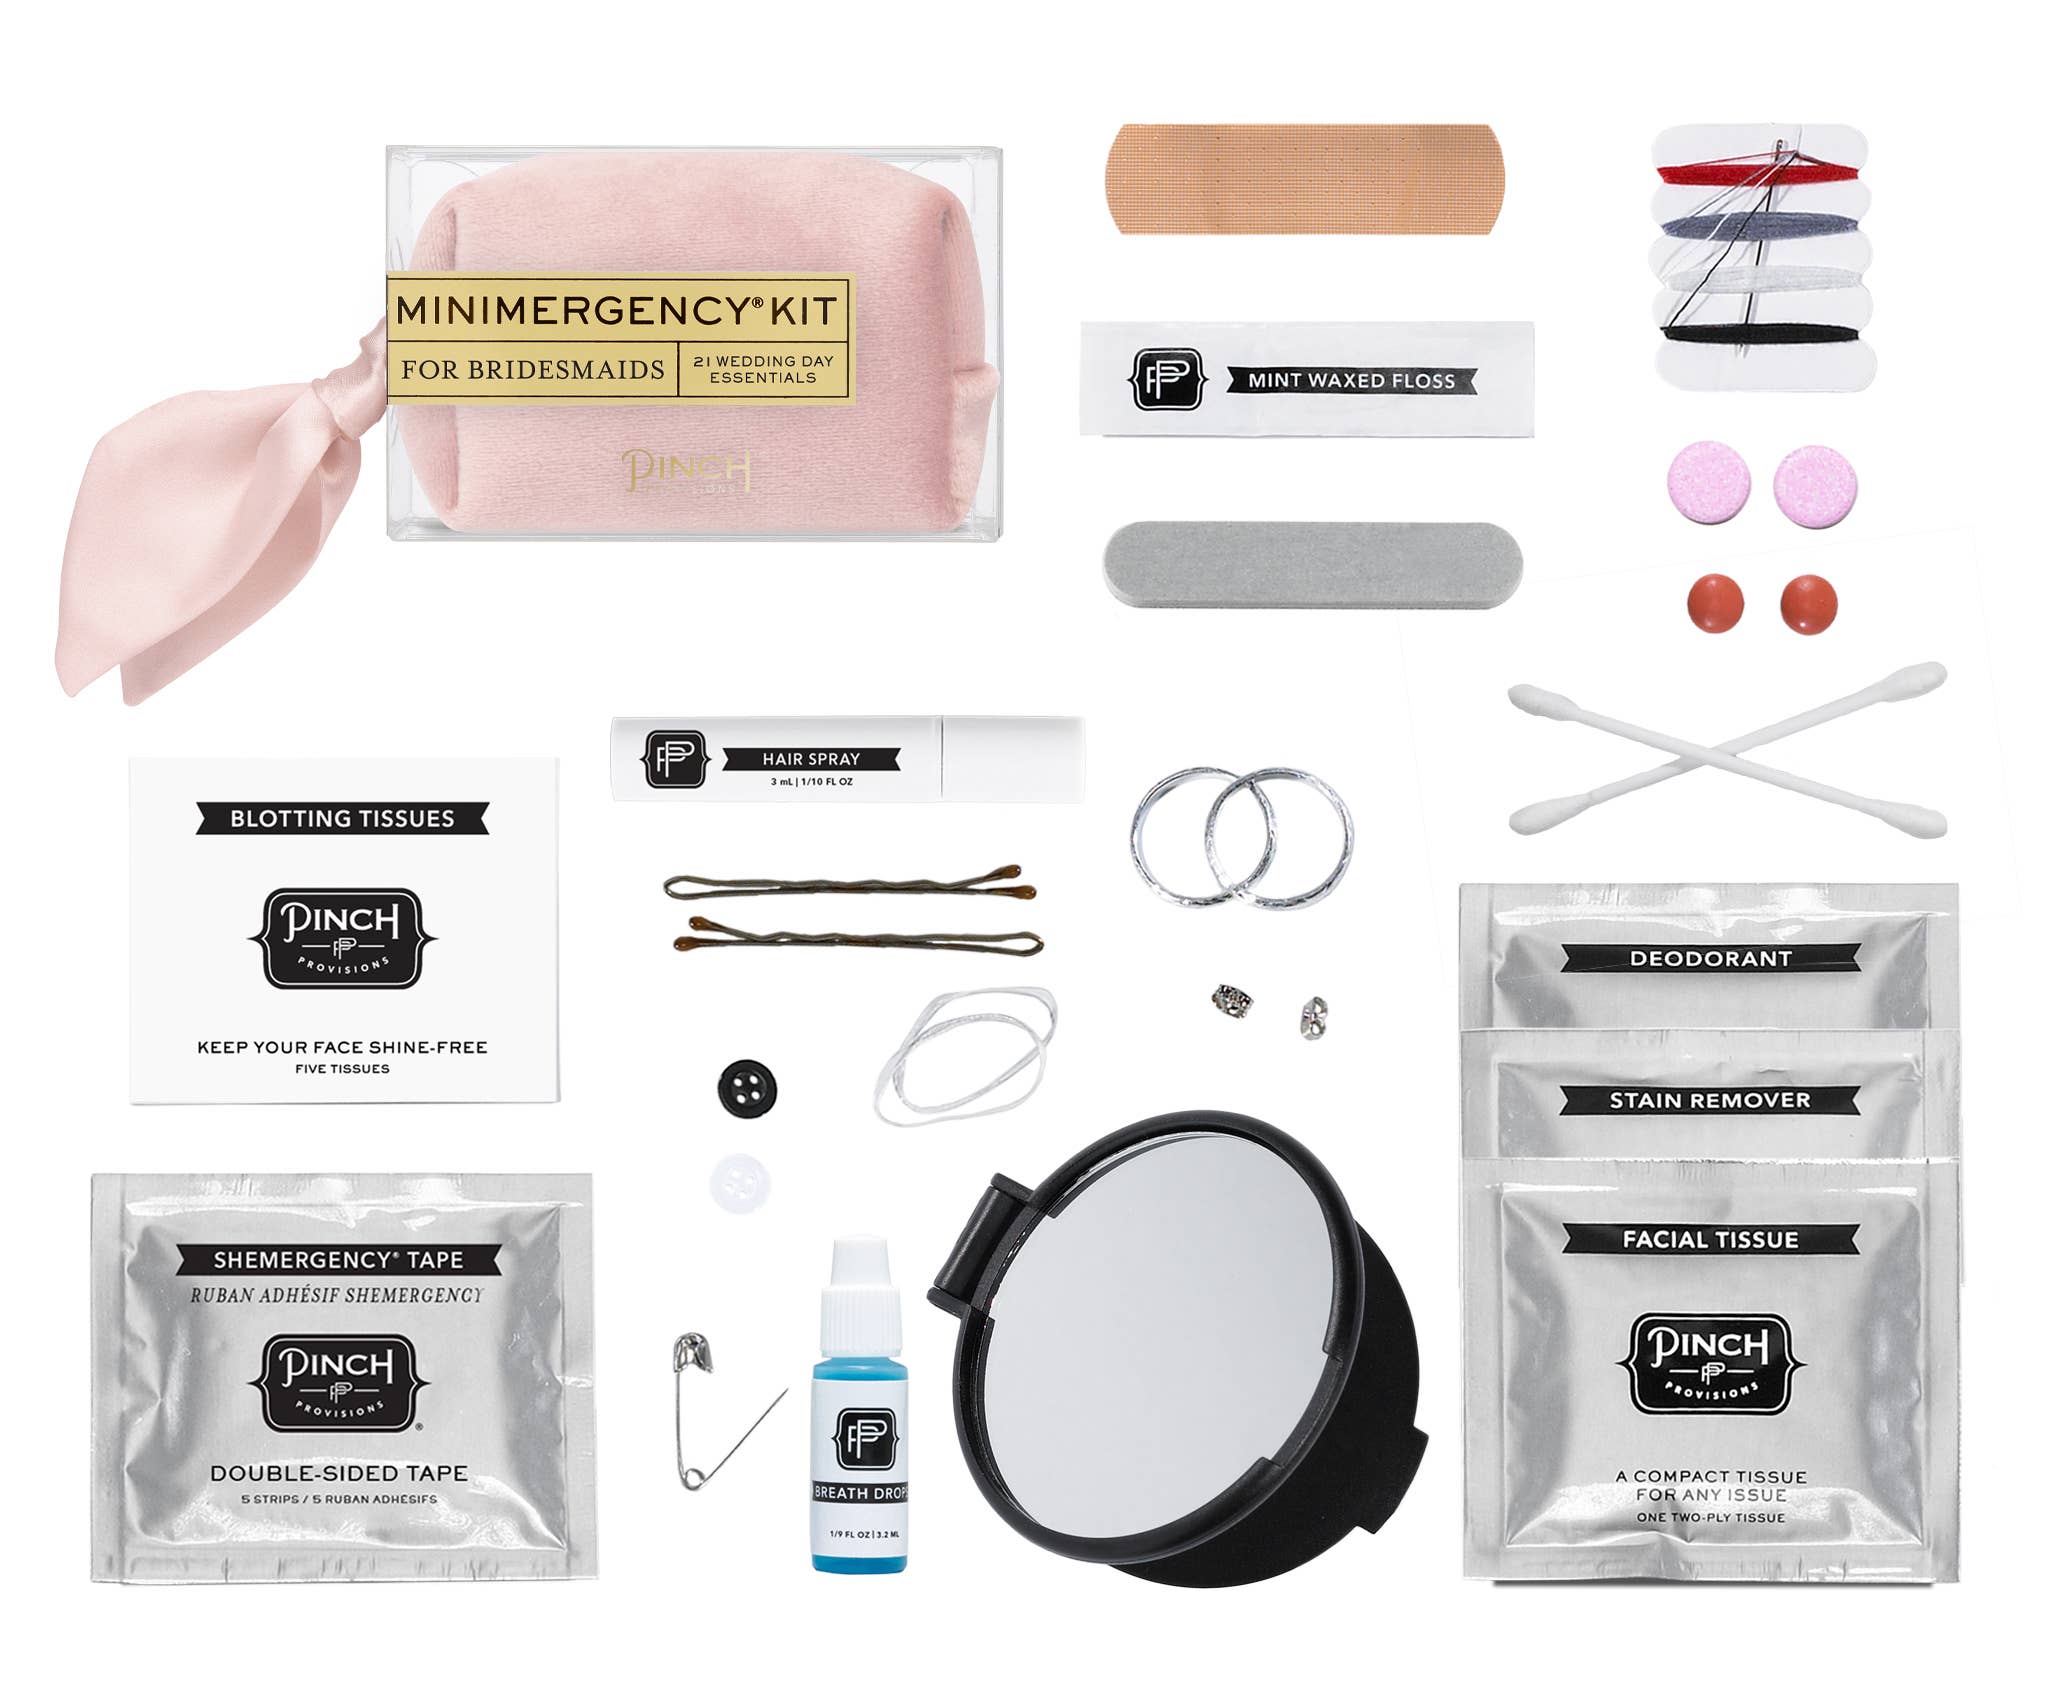 Velvet Minimergency Kits for Bridesmaids: Blush by Pinch Provisions